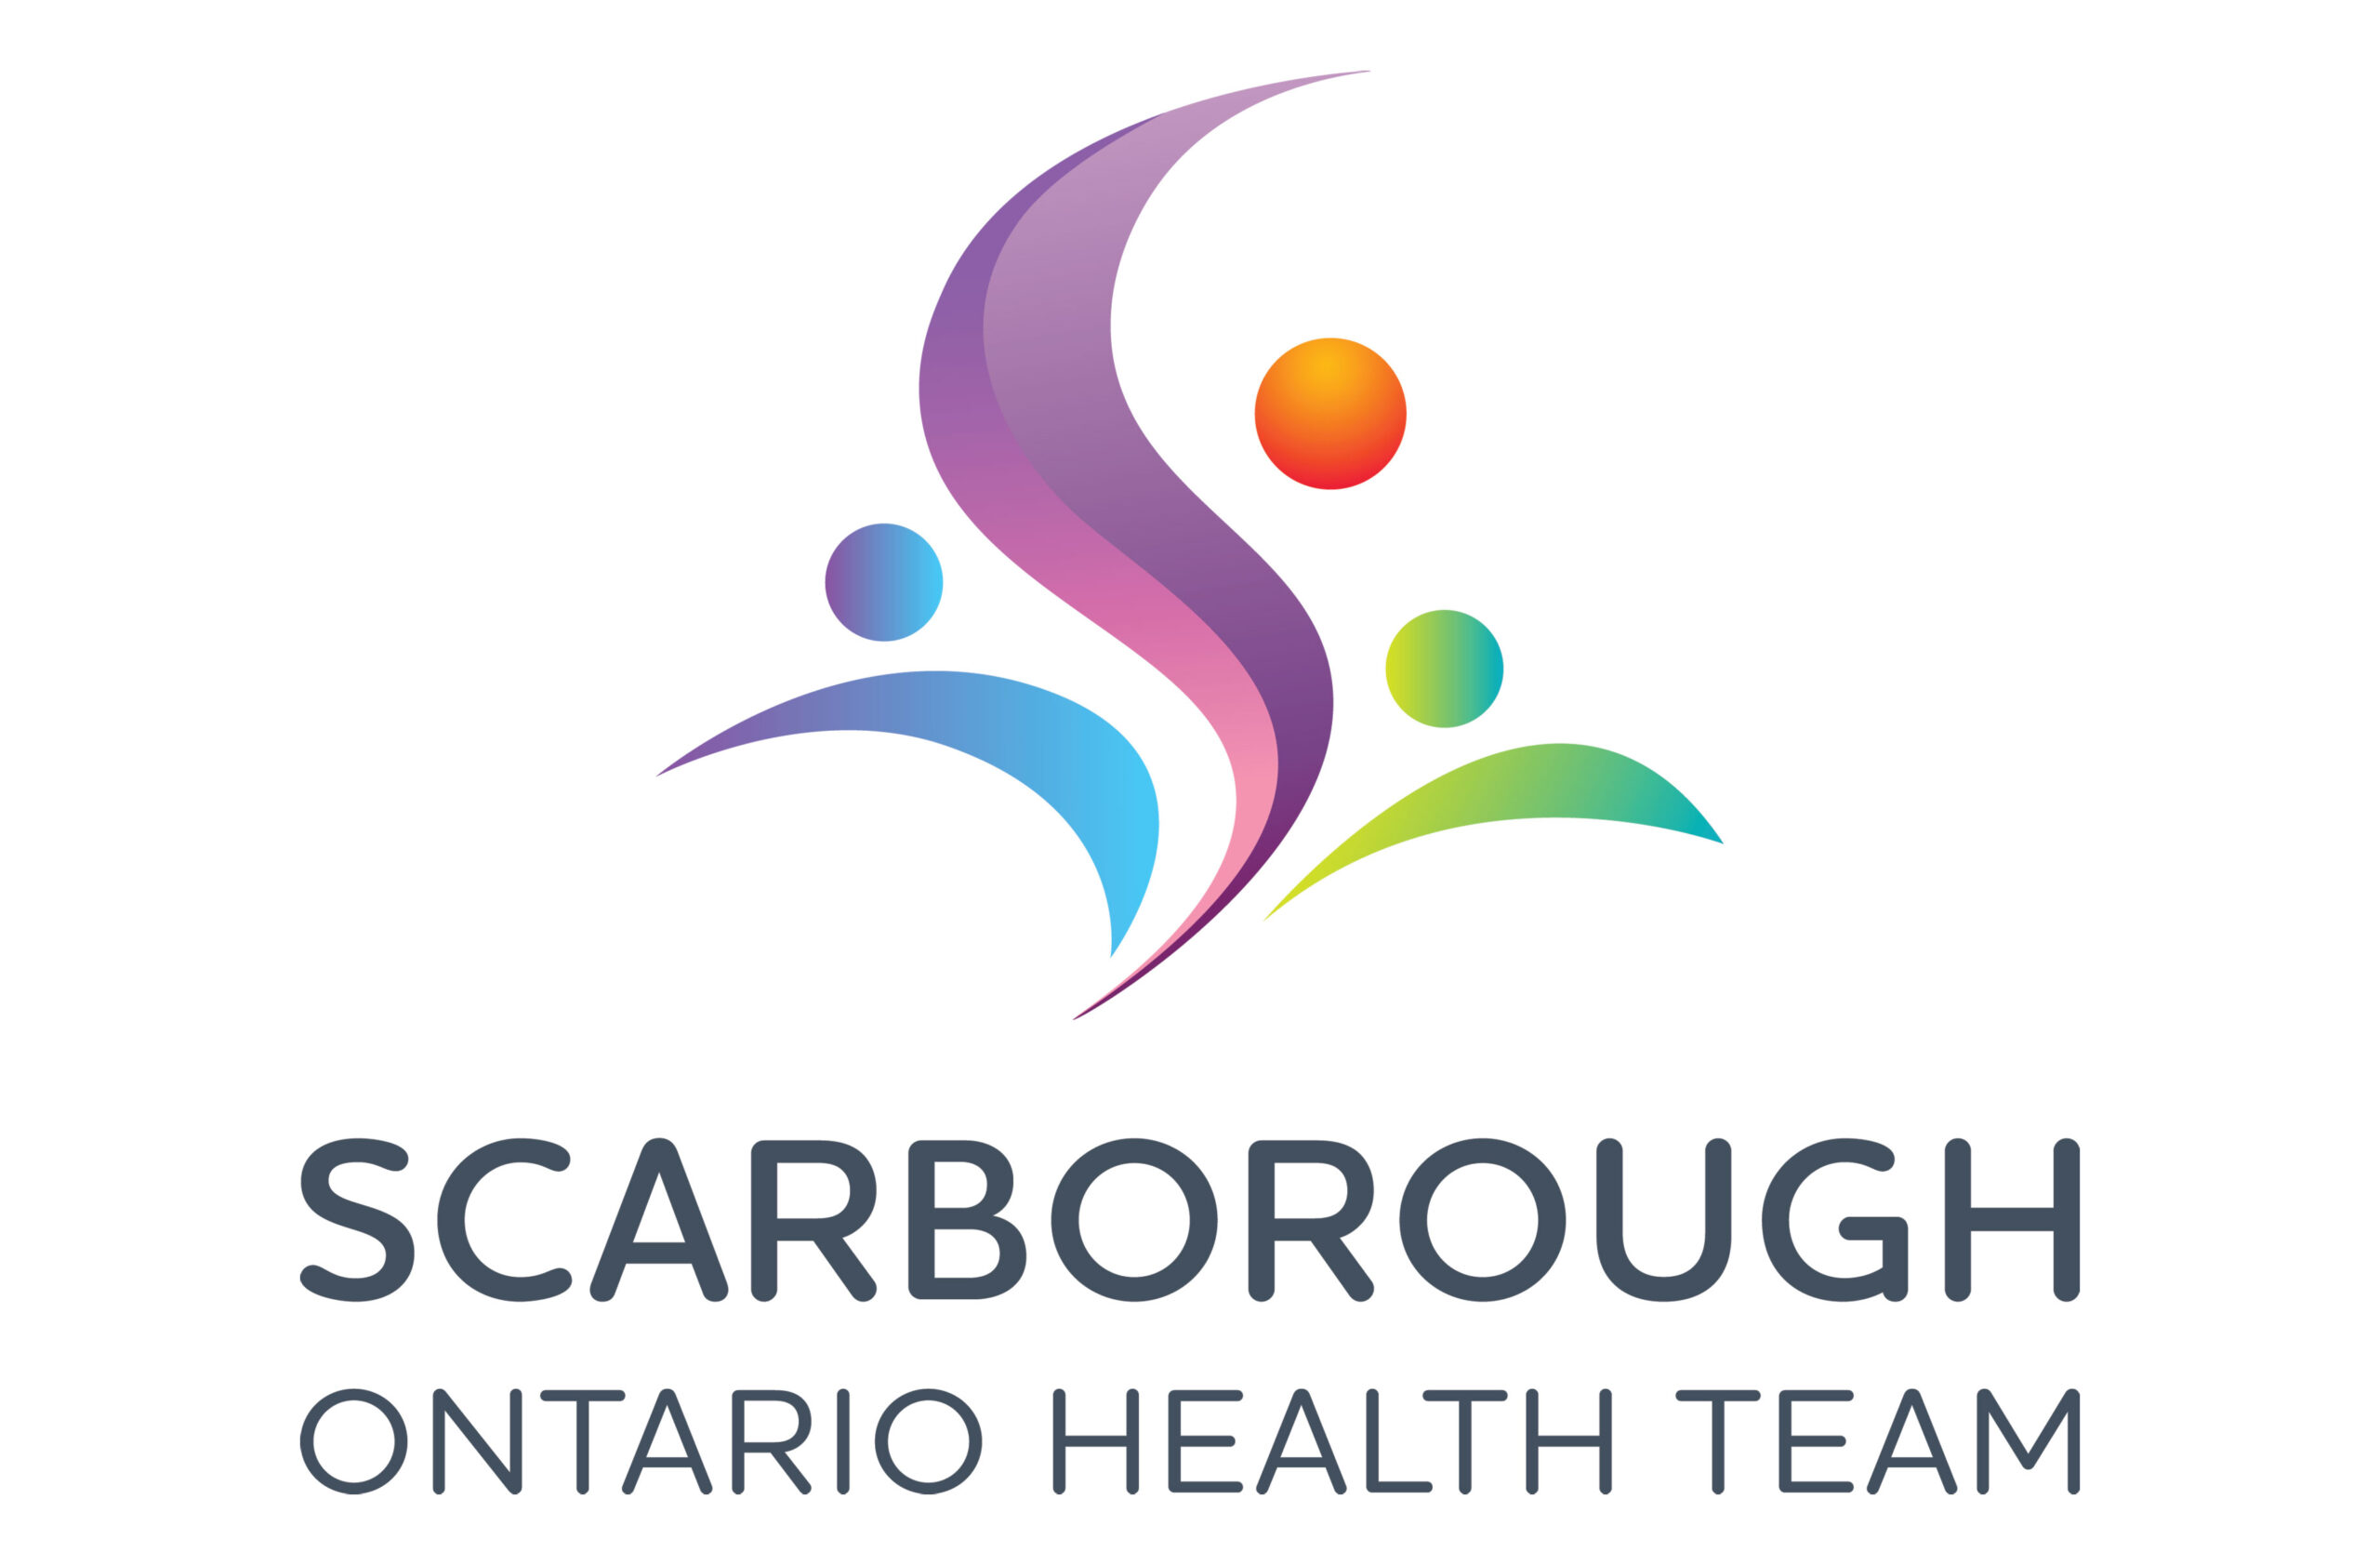 Scarborough OHT’s Rebranding!